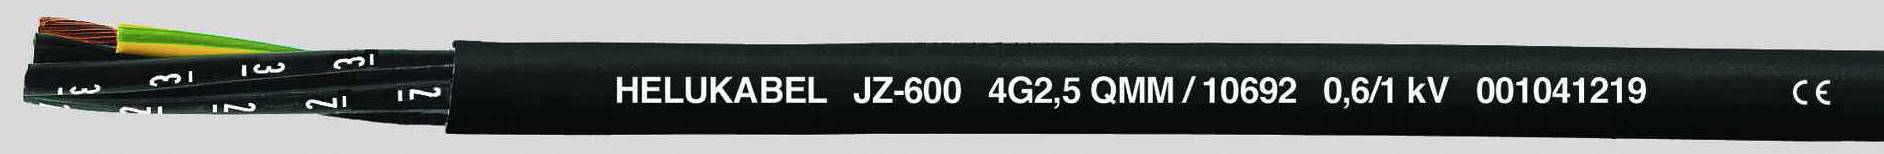 HELUKABEL JZ-600 Steuerleitung 5 G 0.50 mm² Schwarz 10555-1000 1000 m